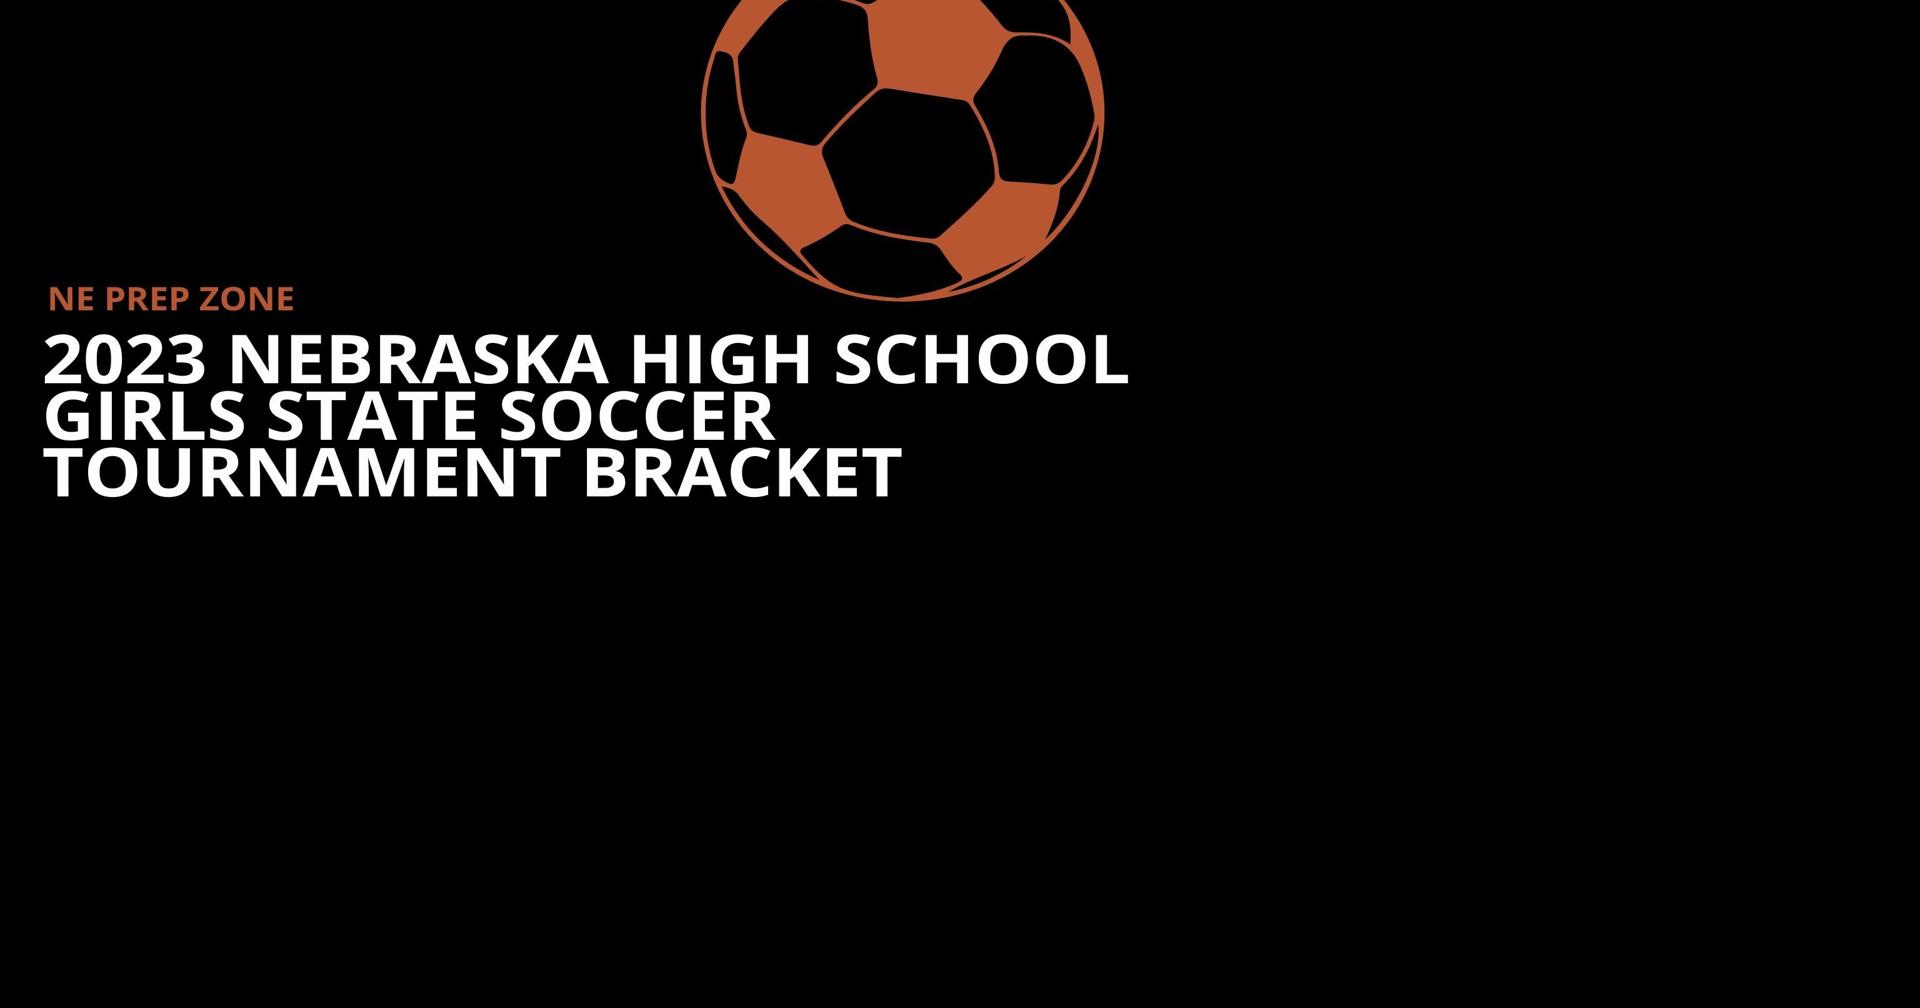 Nebraska high school girls soccer state tournament bracket, May 9